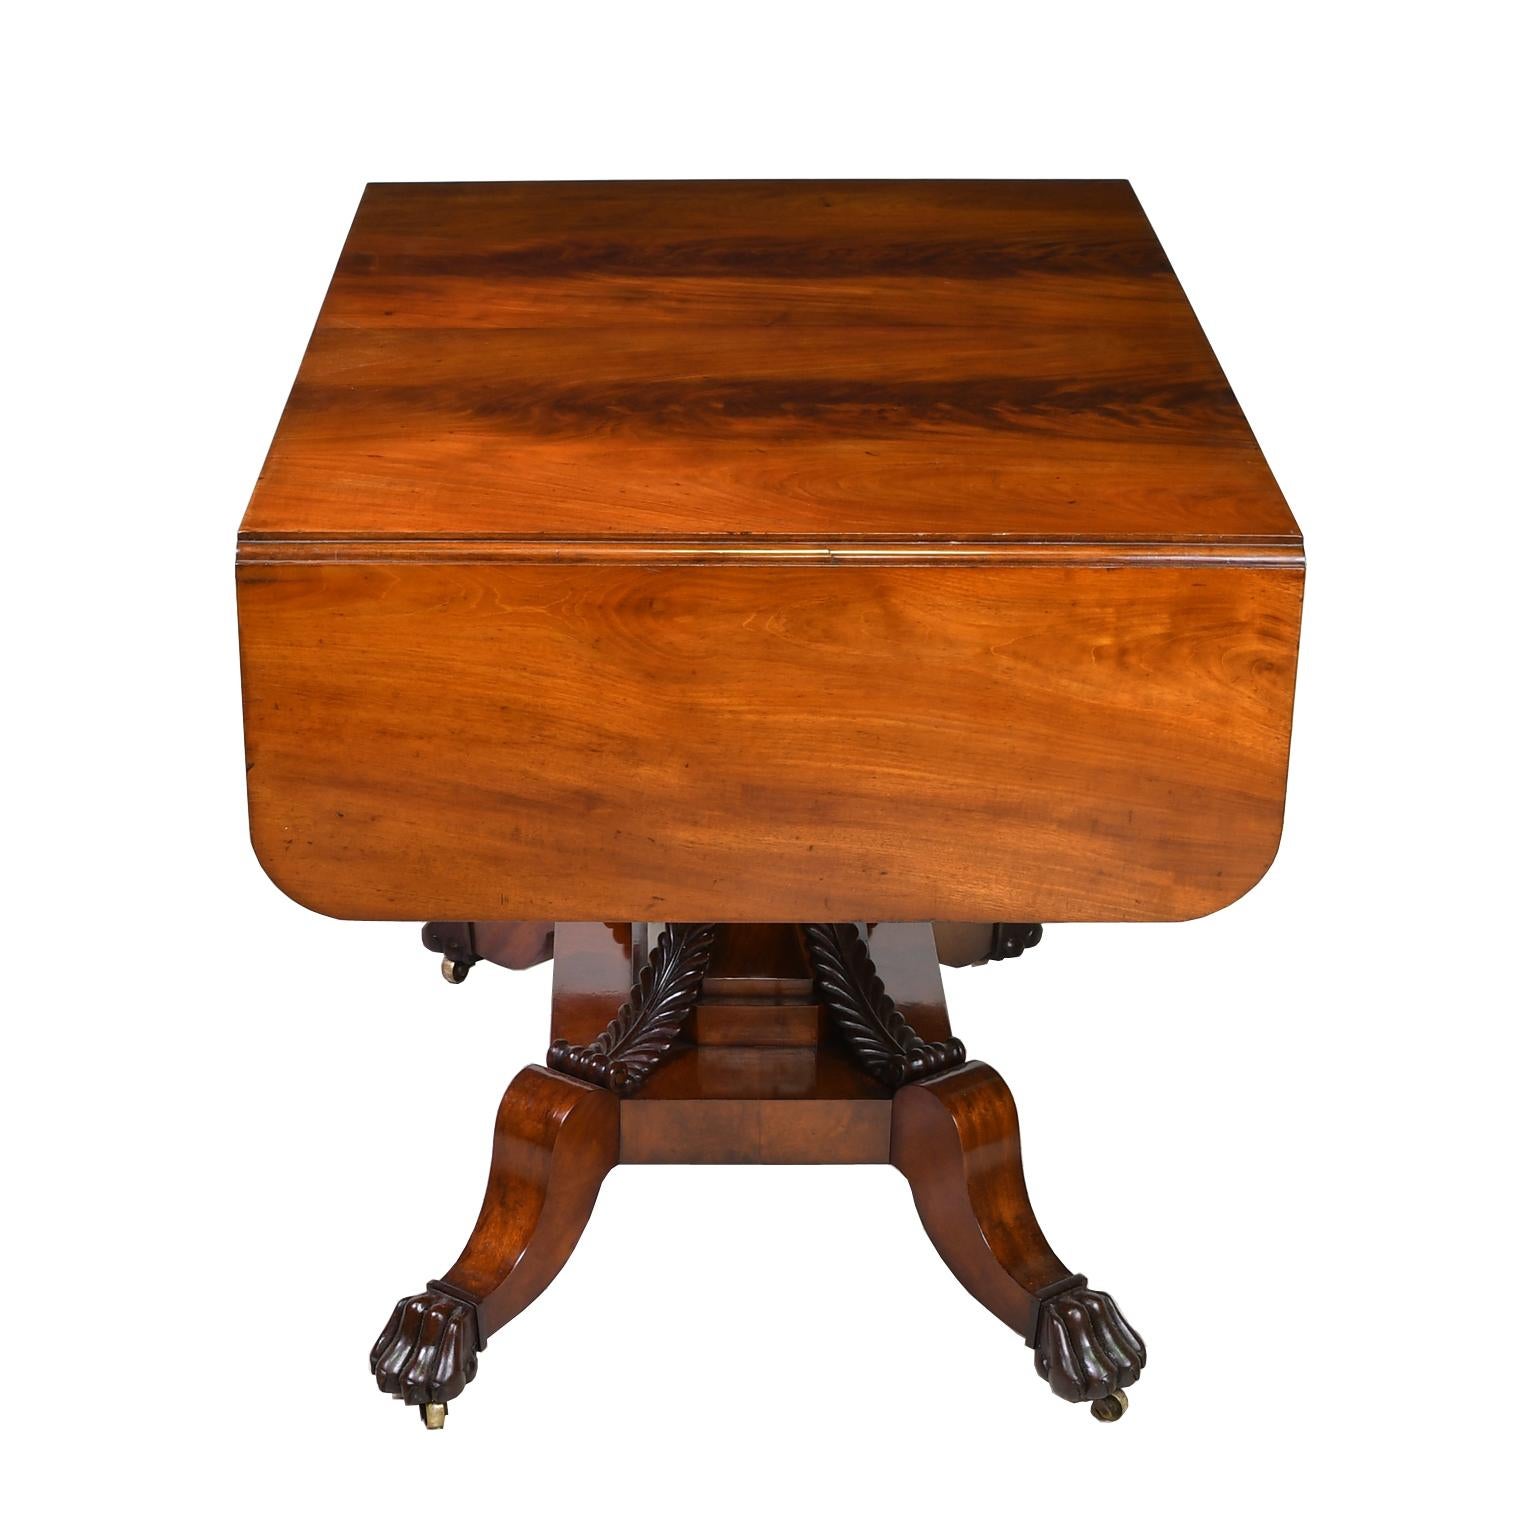  Swedish Karl Johan Salon/Sofa Table or Desk in West Indies Mahogany, c. 1825 For Sale 5